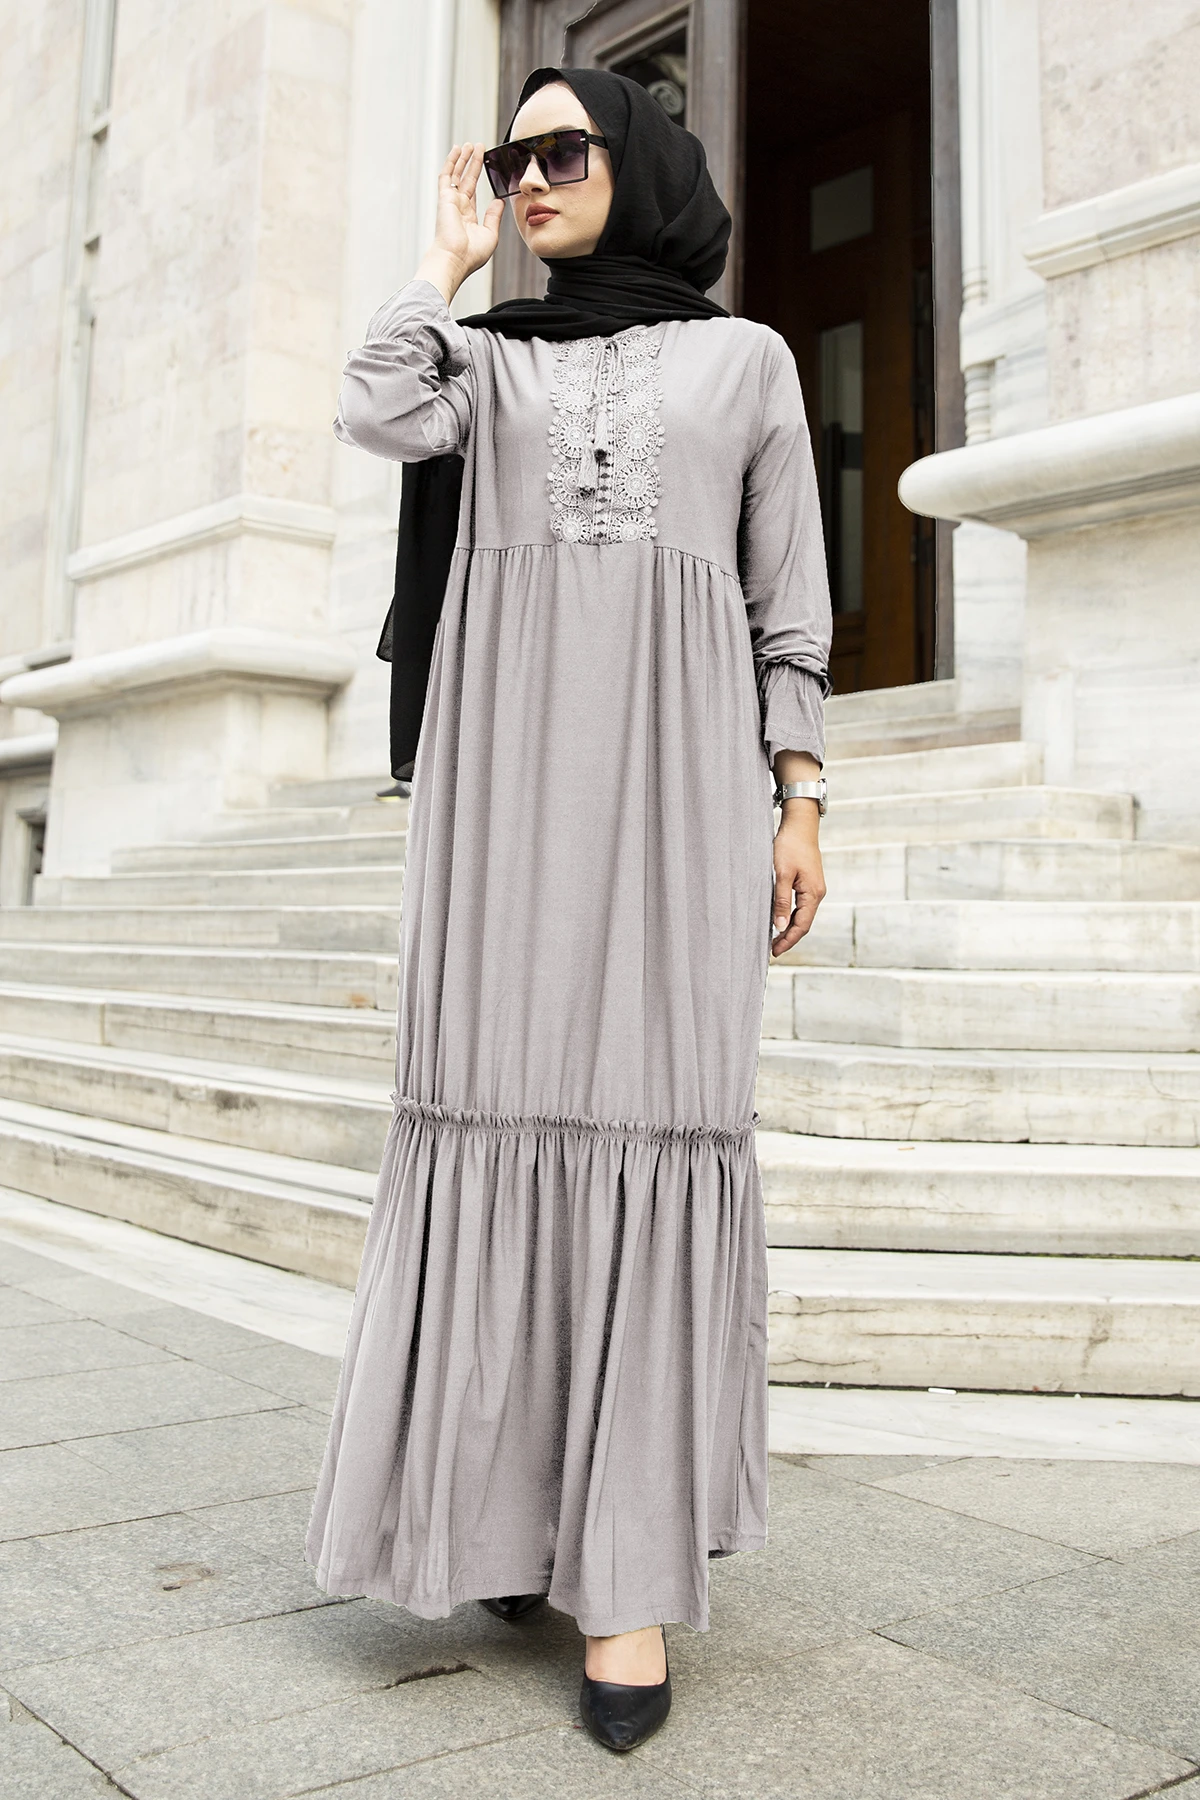 Monica puberty equilibrium Rochie rochii femei 2021 caftan abaya mult Musulman rochii de seara hijab  abayas turc Hijab Petrecere Casual femei haine cumpara ~ Tradițională și  Culturală Purta > www.cepsports.ro